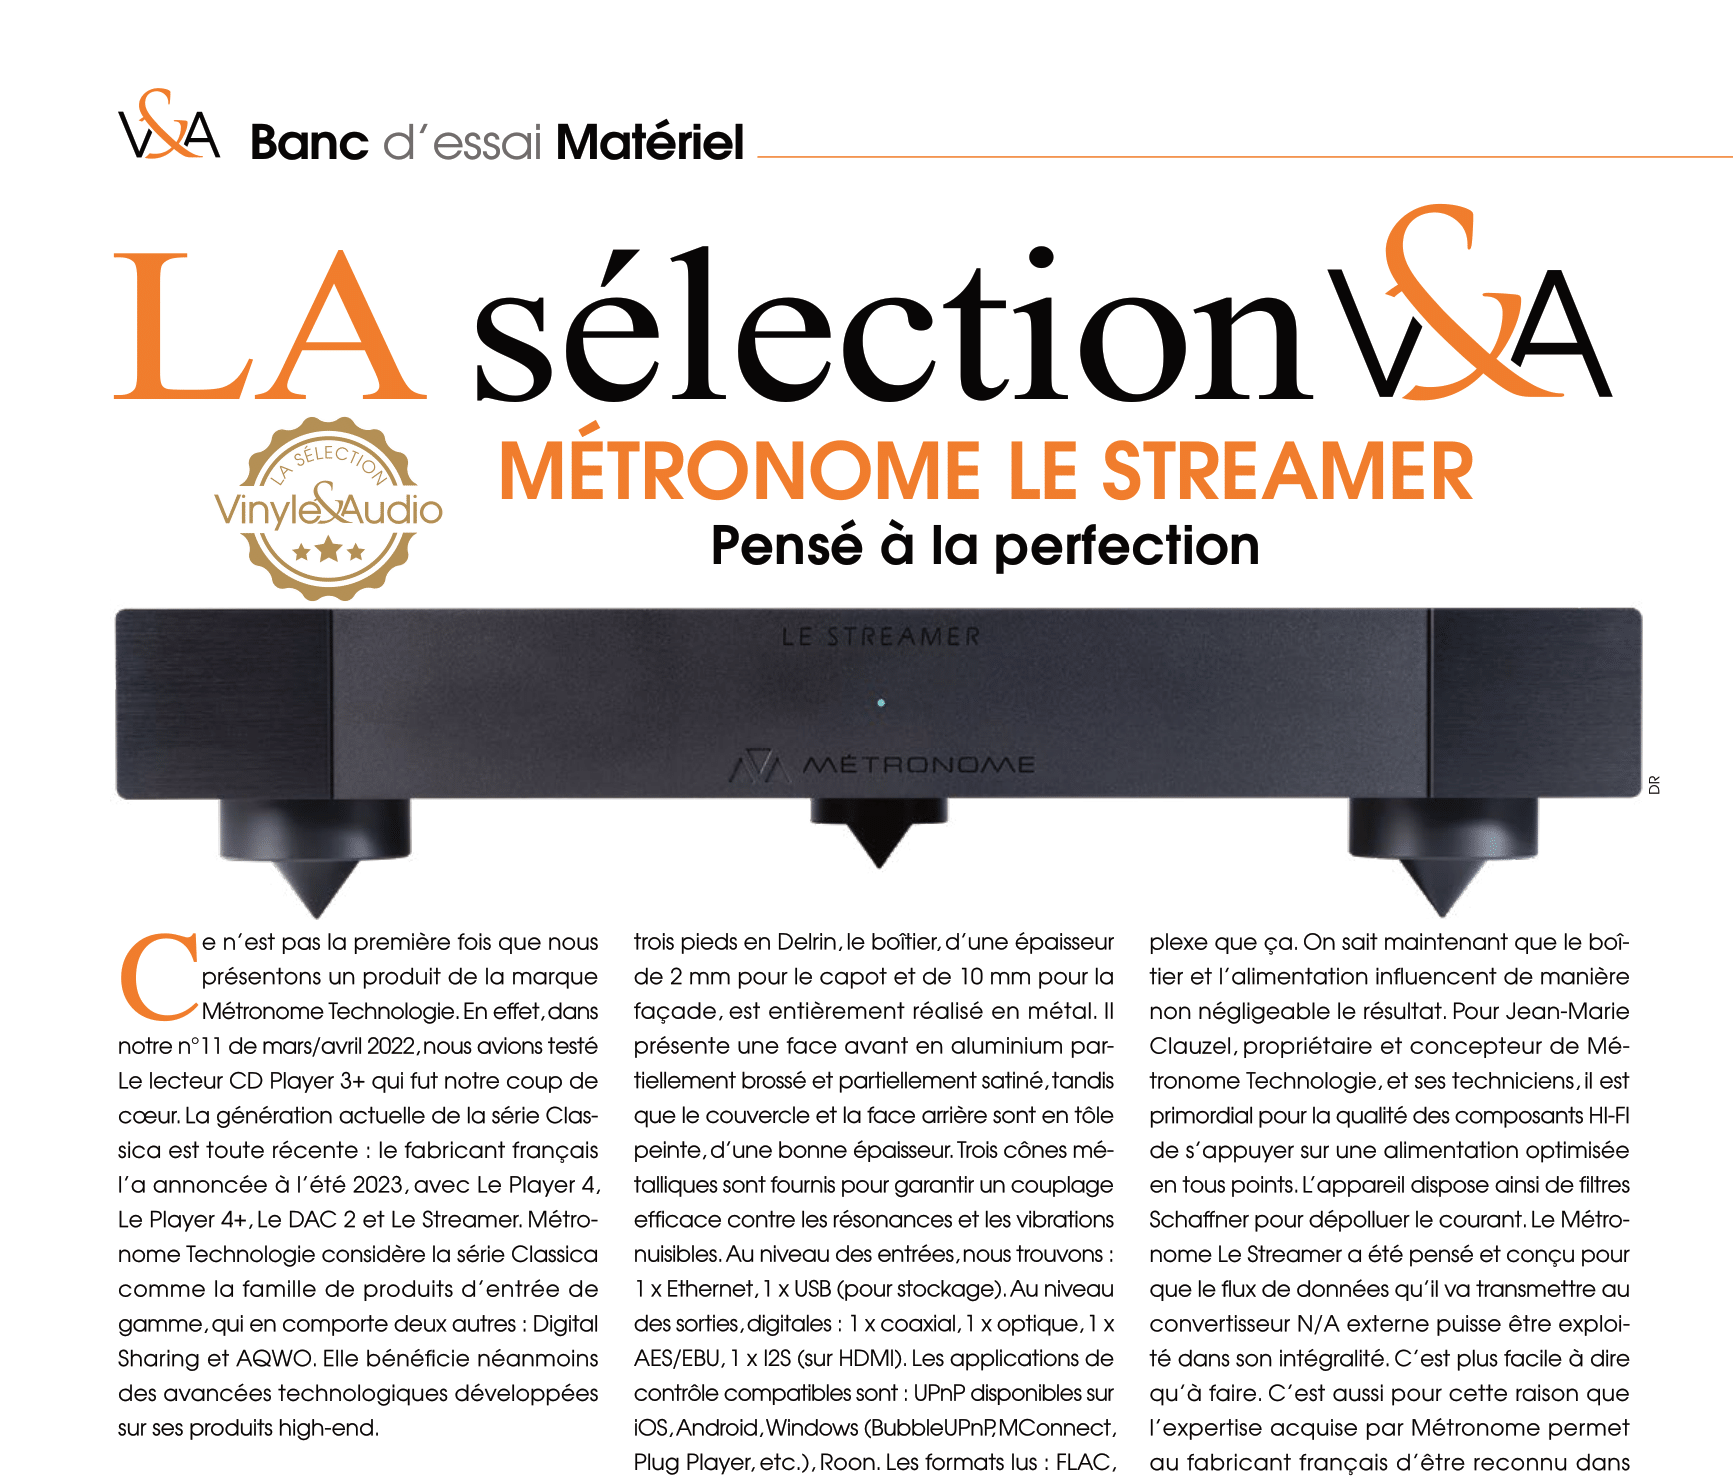 La sélection V&A : Métronome Le Streamer